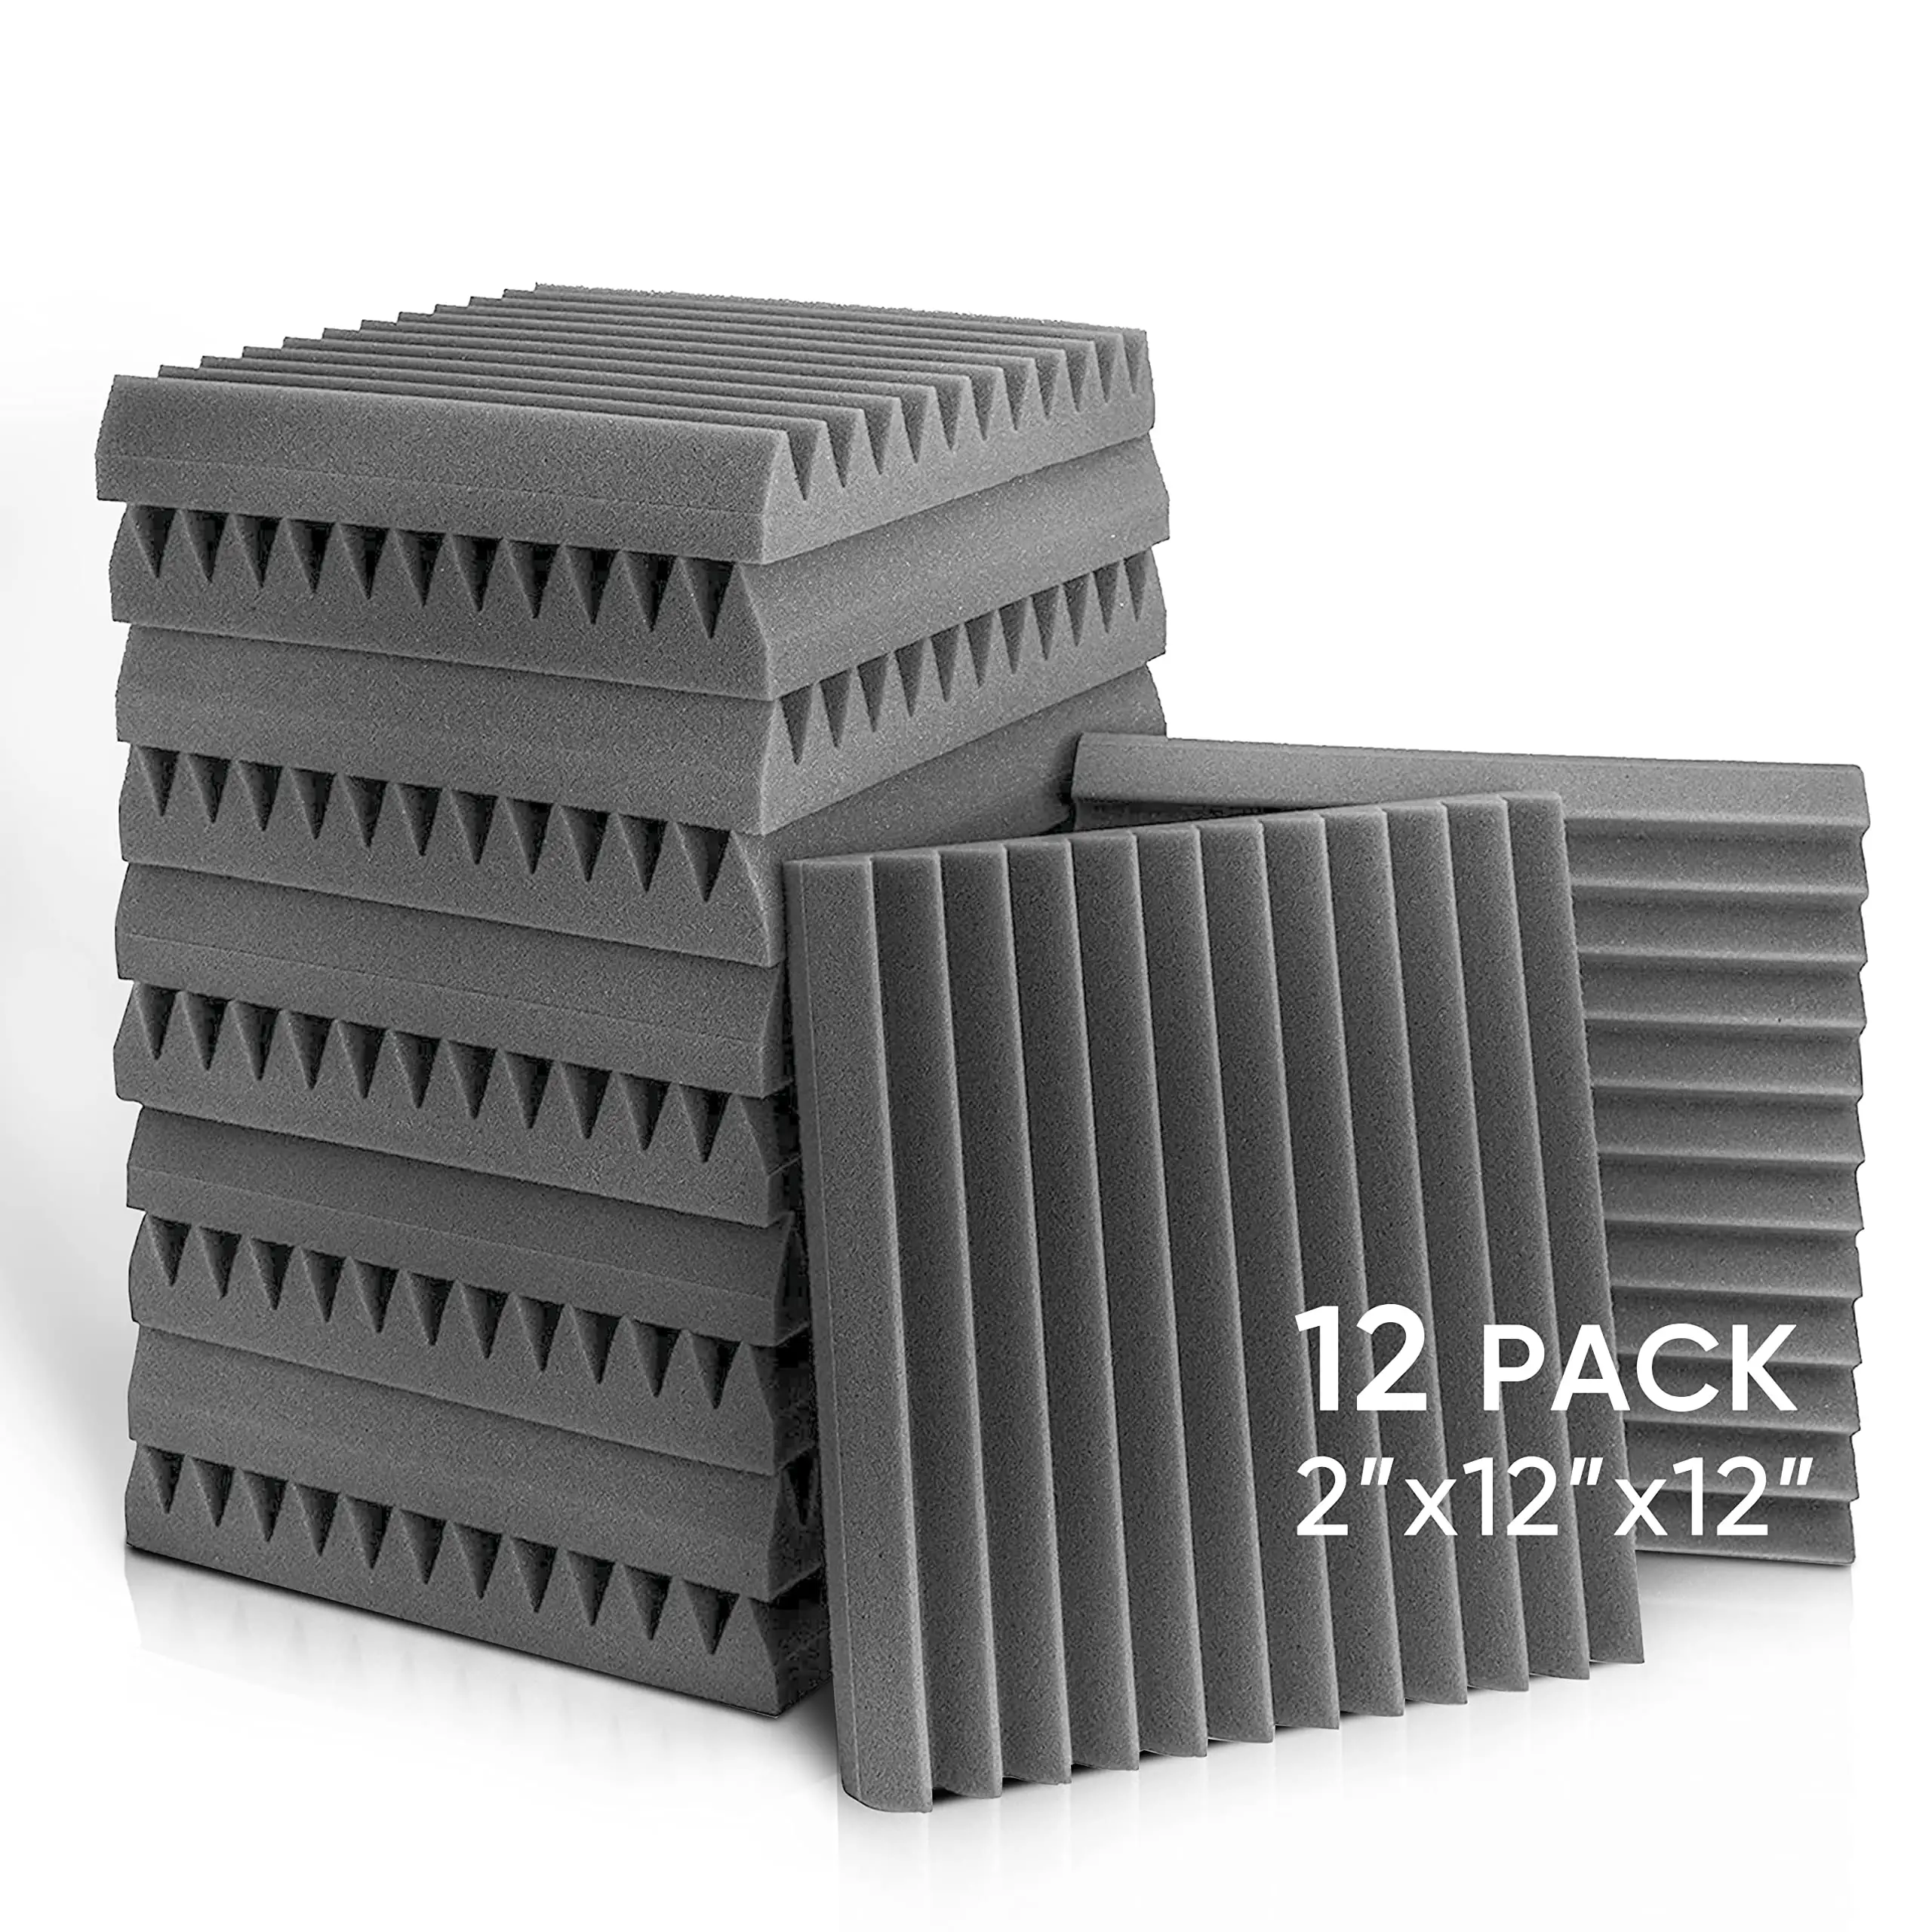 Acoustic Foam Panels 2" X 12" X 12" Studio Wedge Tiles Sound Panels wedges Soundproof Foam Padding Sound Insulation Absorbing